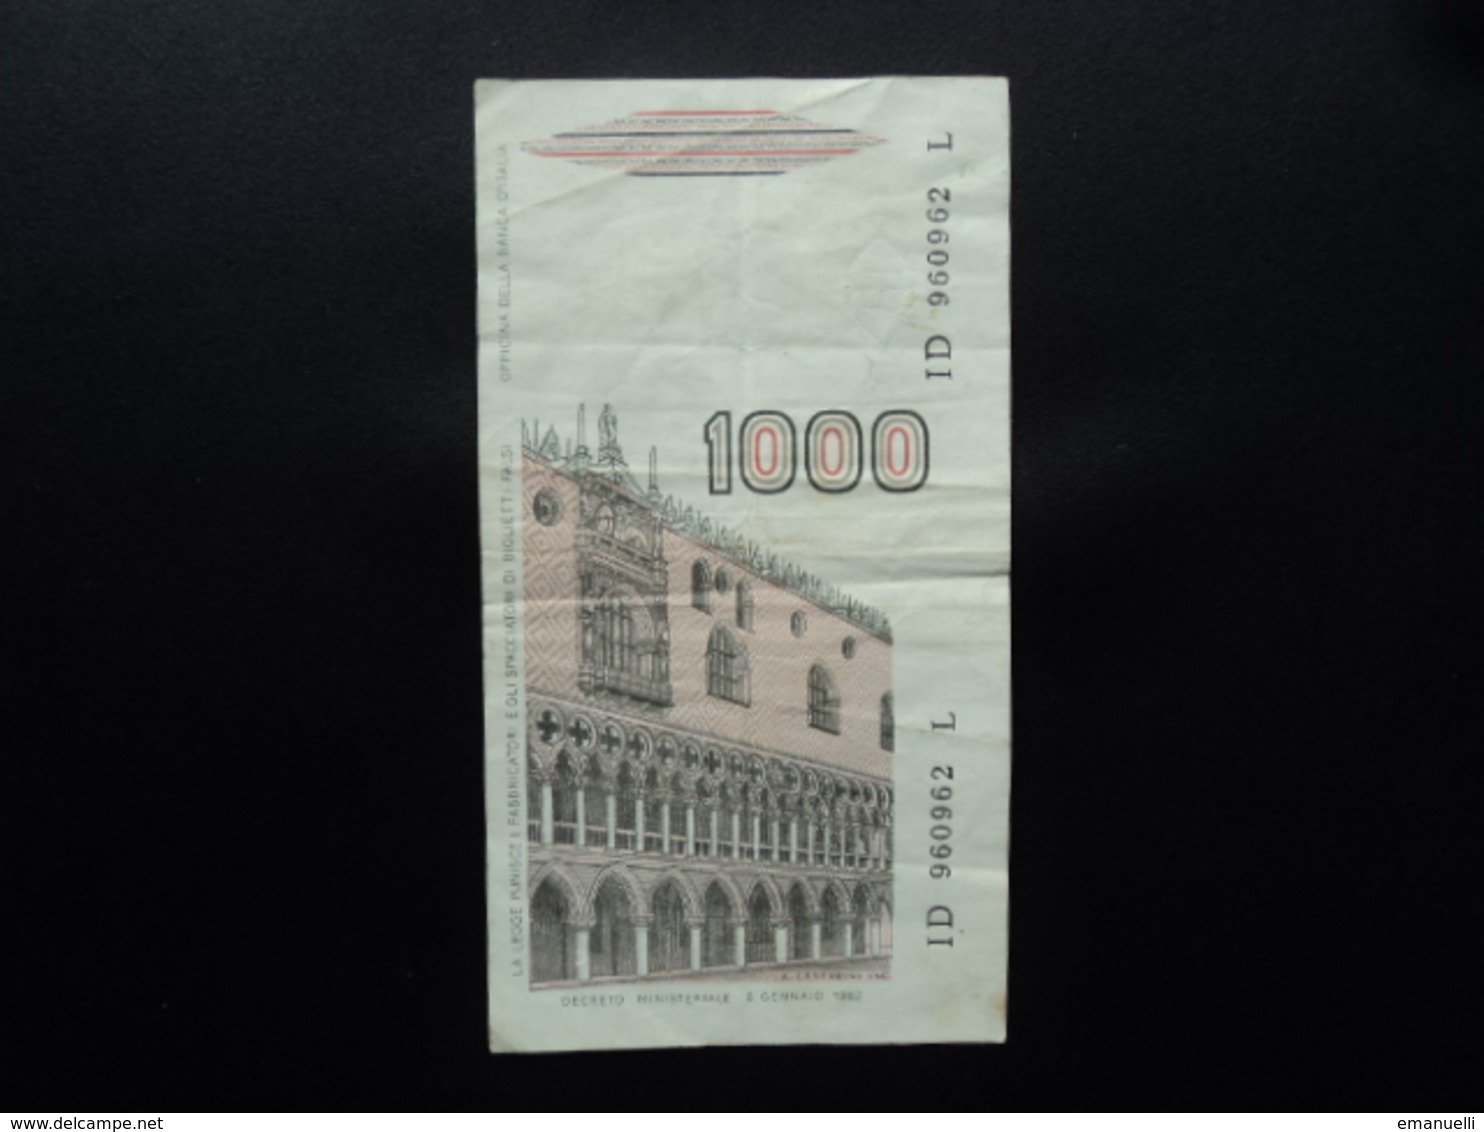 ITALIE : 1000 LIRE  28.10.1985   P 109a / CI 65 BS 491 *    TTB+ - 1000 Lire